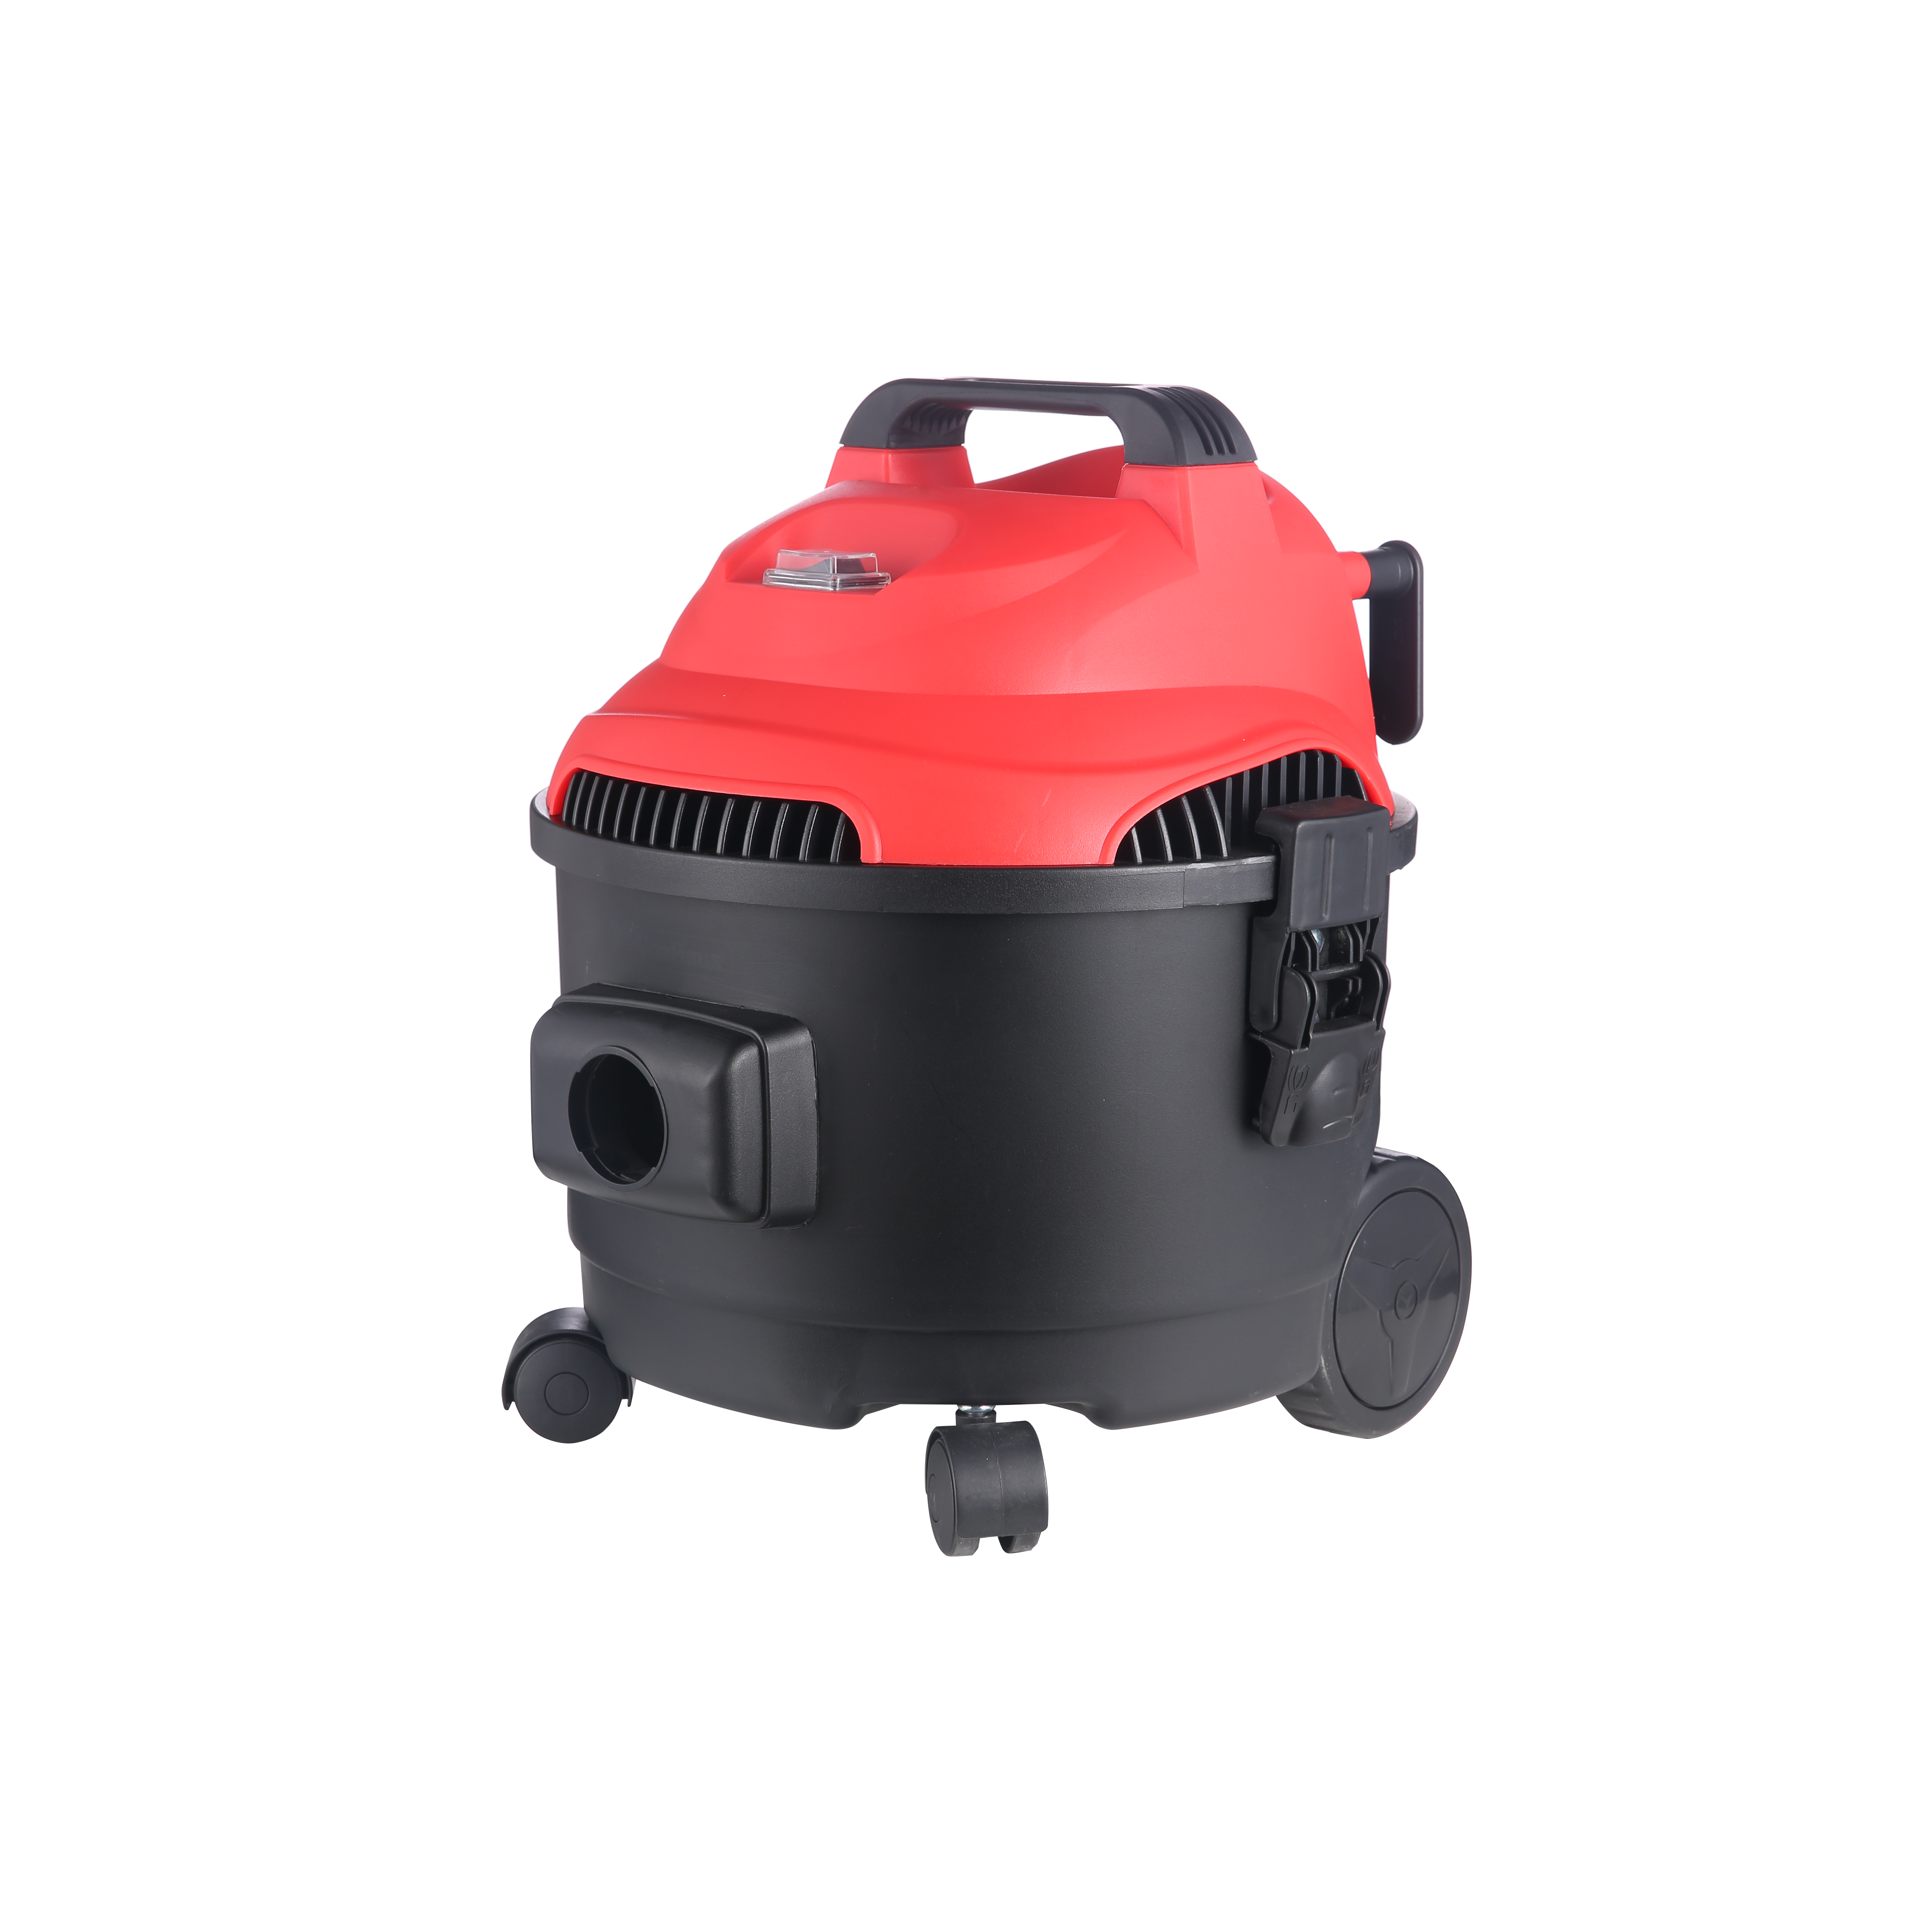 RL128 2019 china manufacturer electric vacuum cleaner